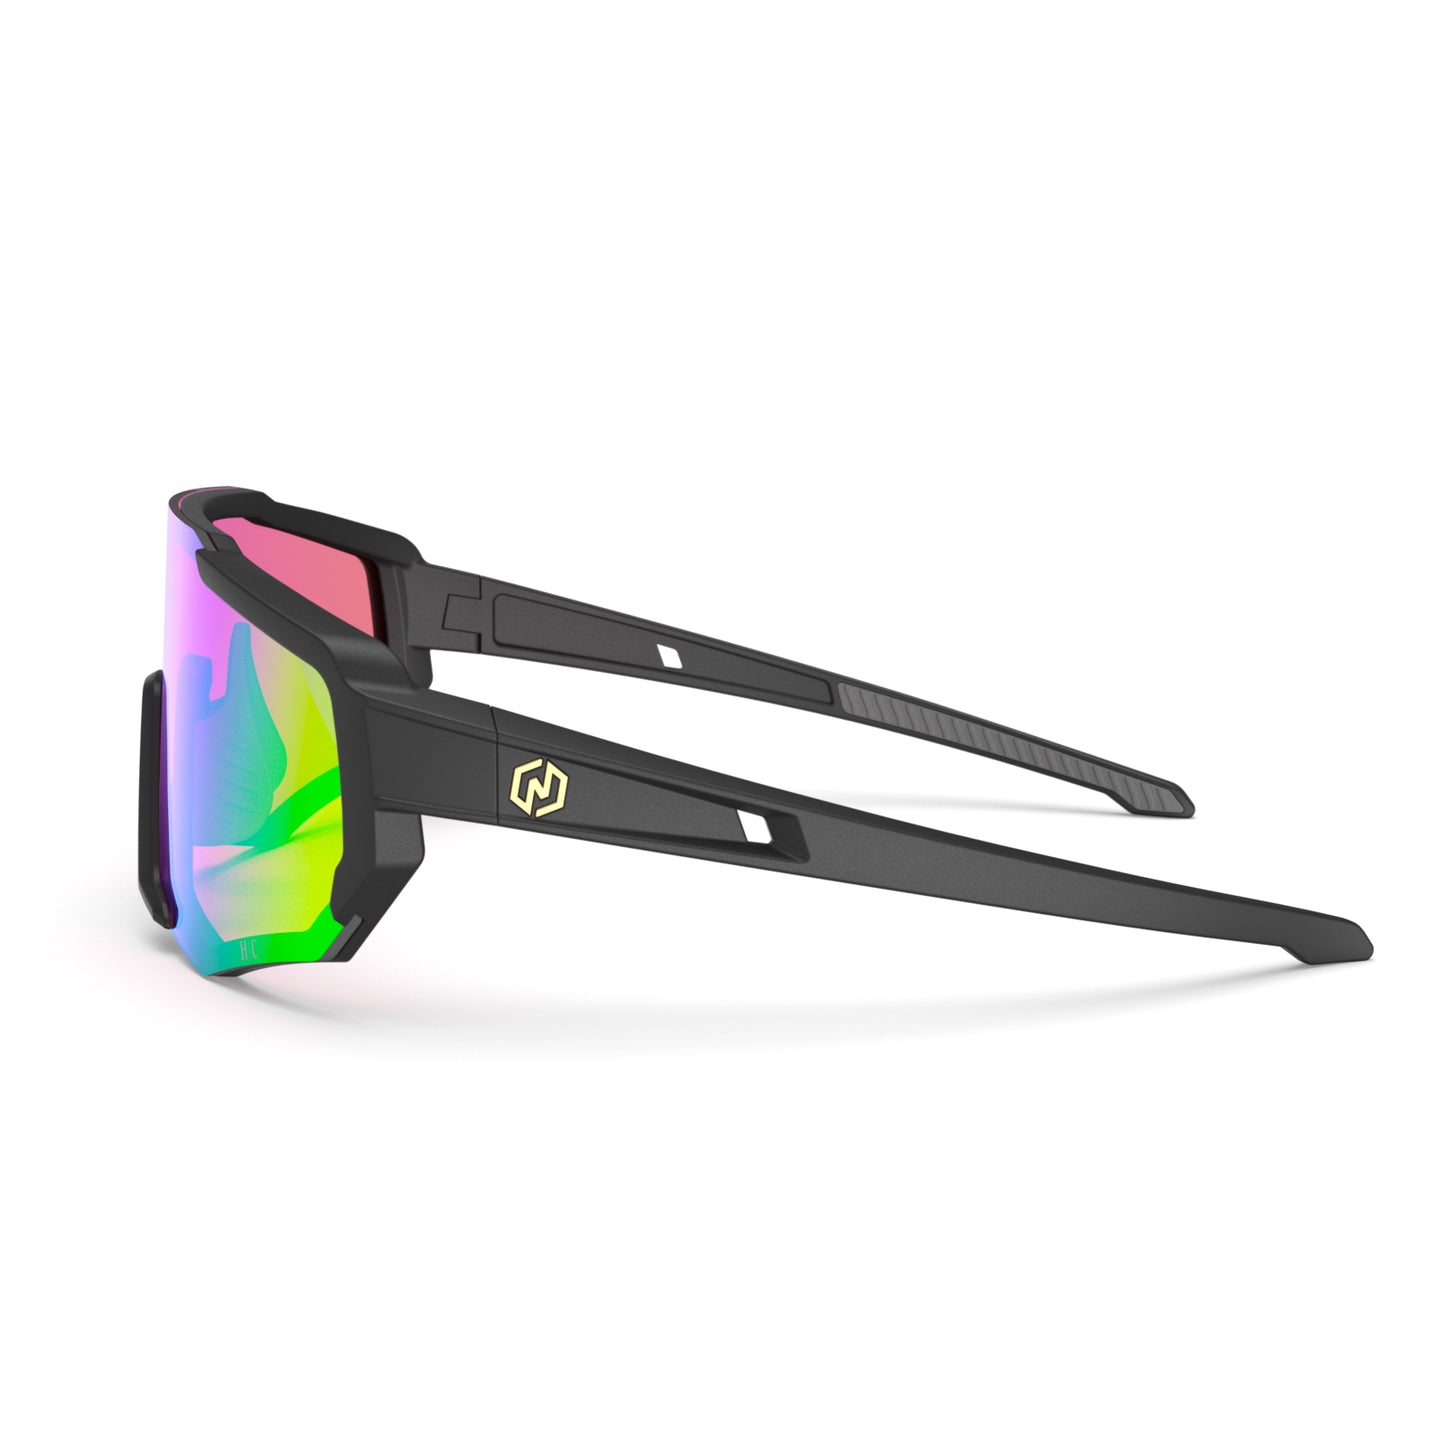 Kanon Diamant™ Sunglasses/Golf/Baseball + 2 Replacement Lenses